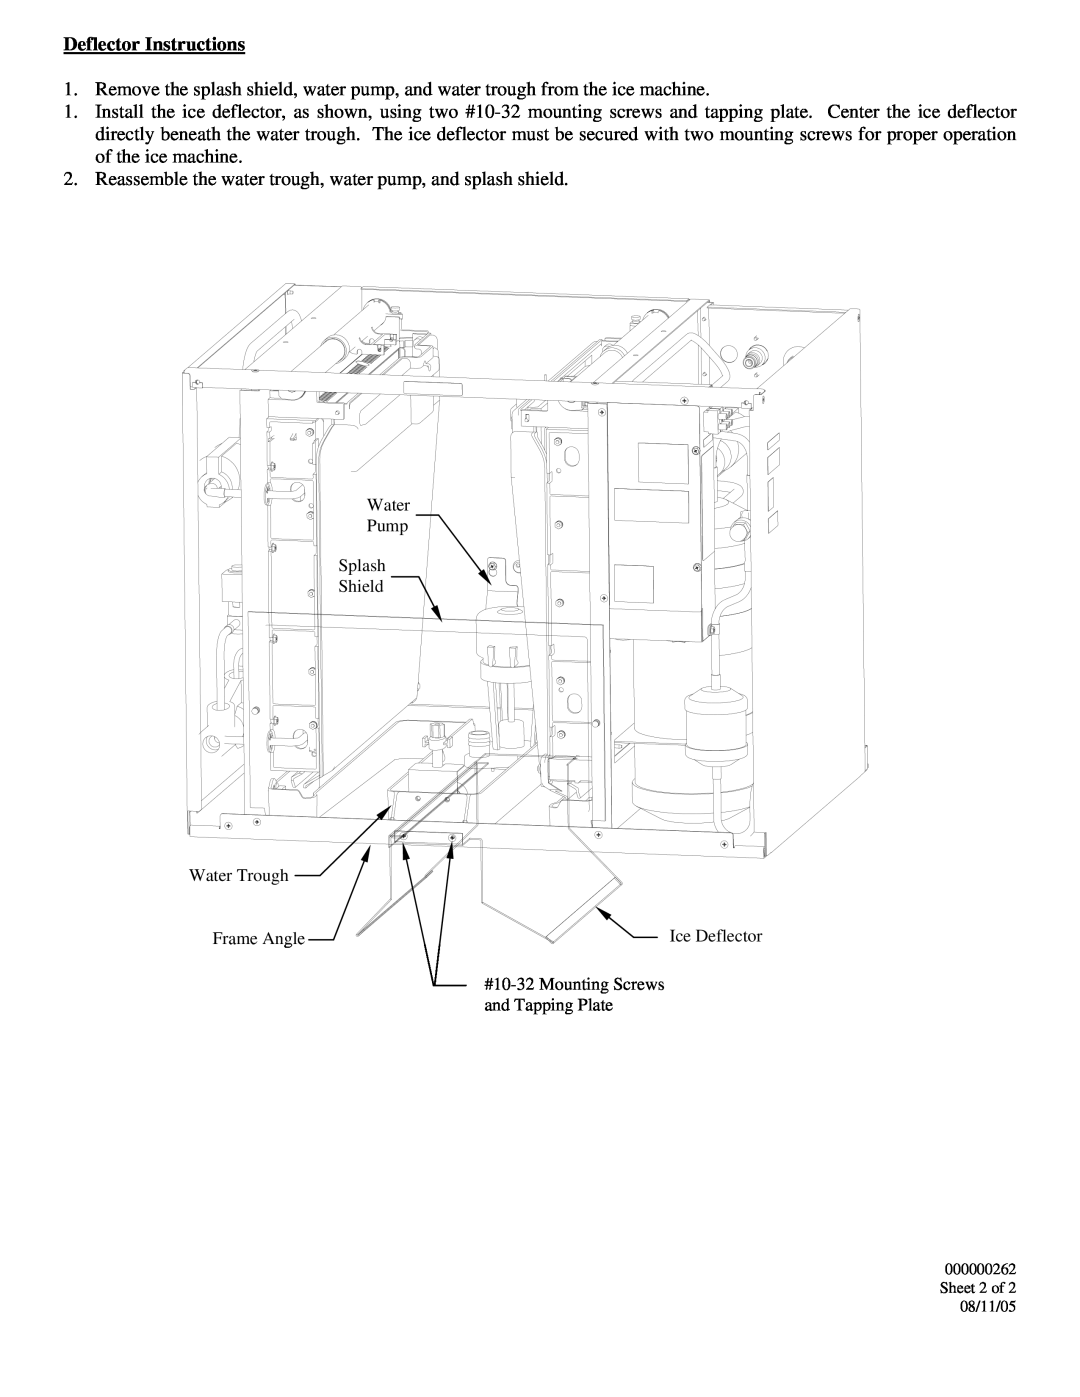 Manitowoc Ice K00375 Deflector Instructions, Water Pump Splash Shield Water Trough, Frame Angle, Ice Deflector 